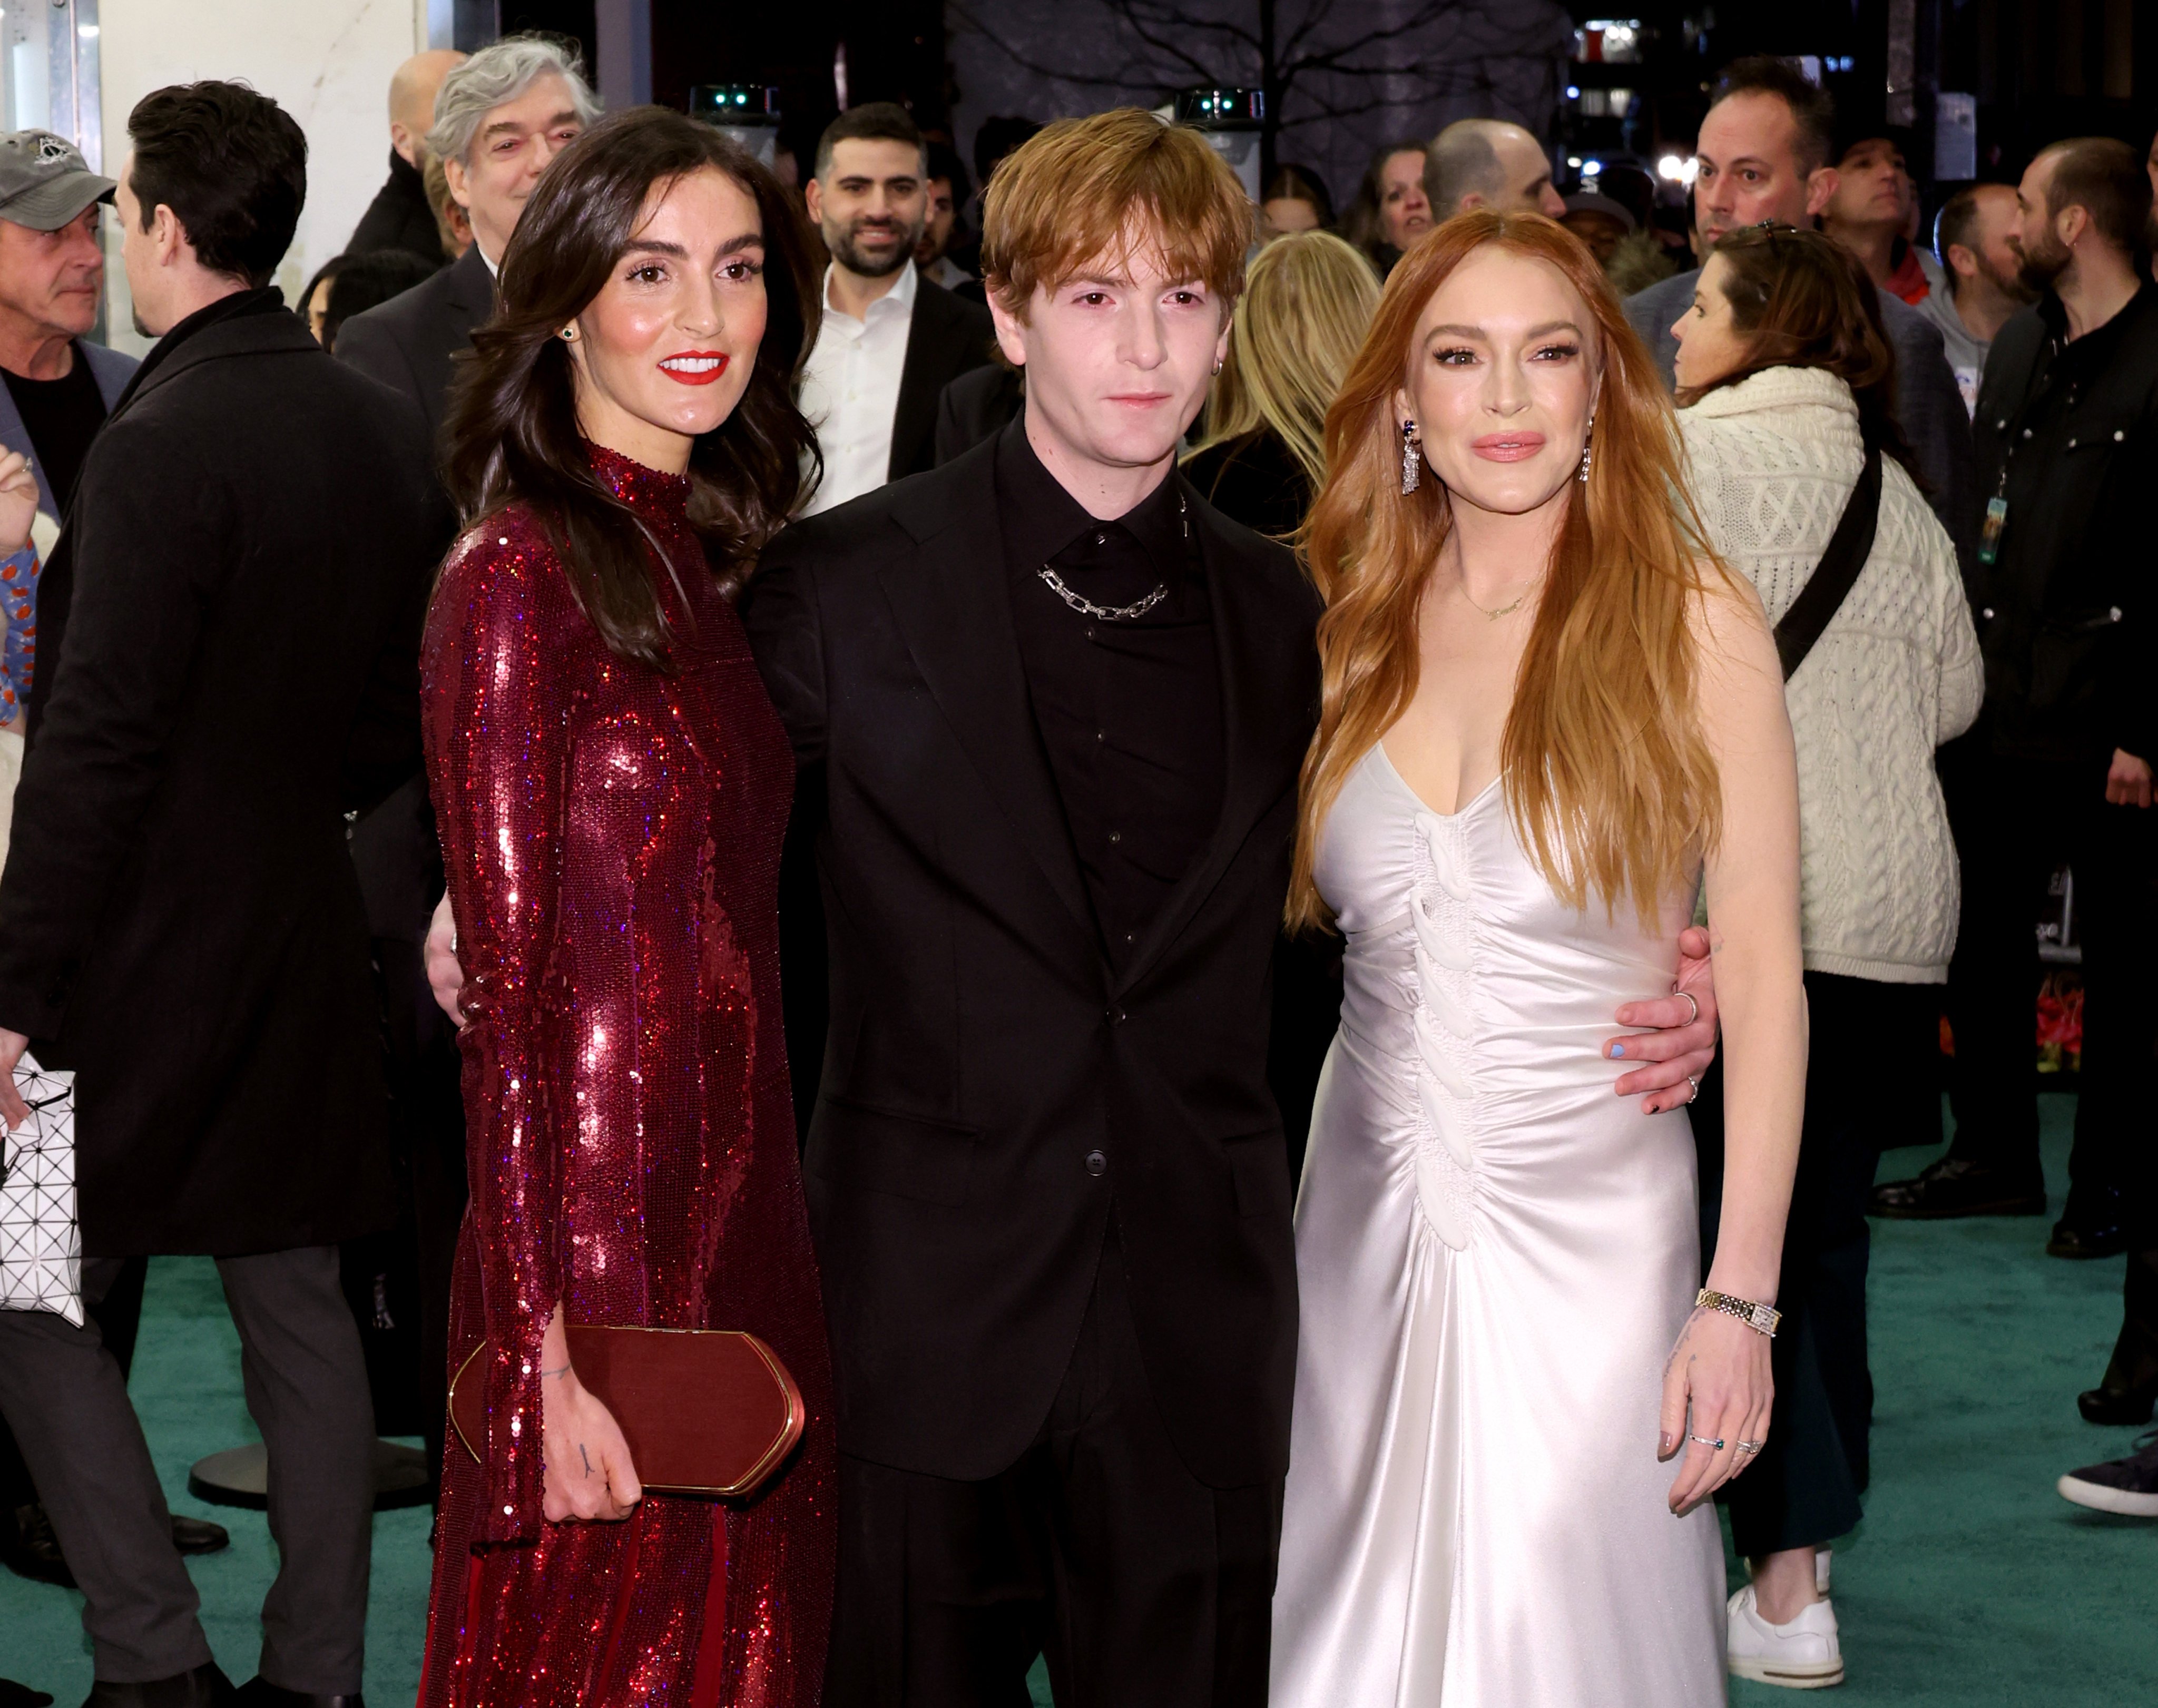 Lindsay Lohan with her siblings Aliana Lohan and Dakota Lohan at the premiere of Irish Wish. Photo: Getty Images